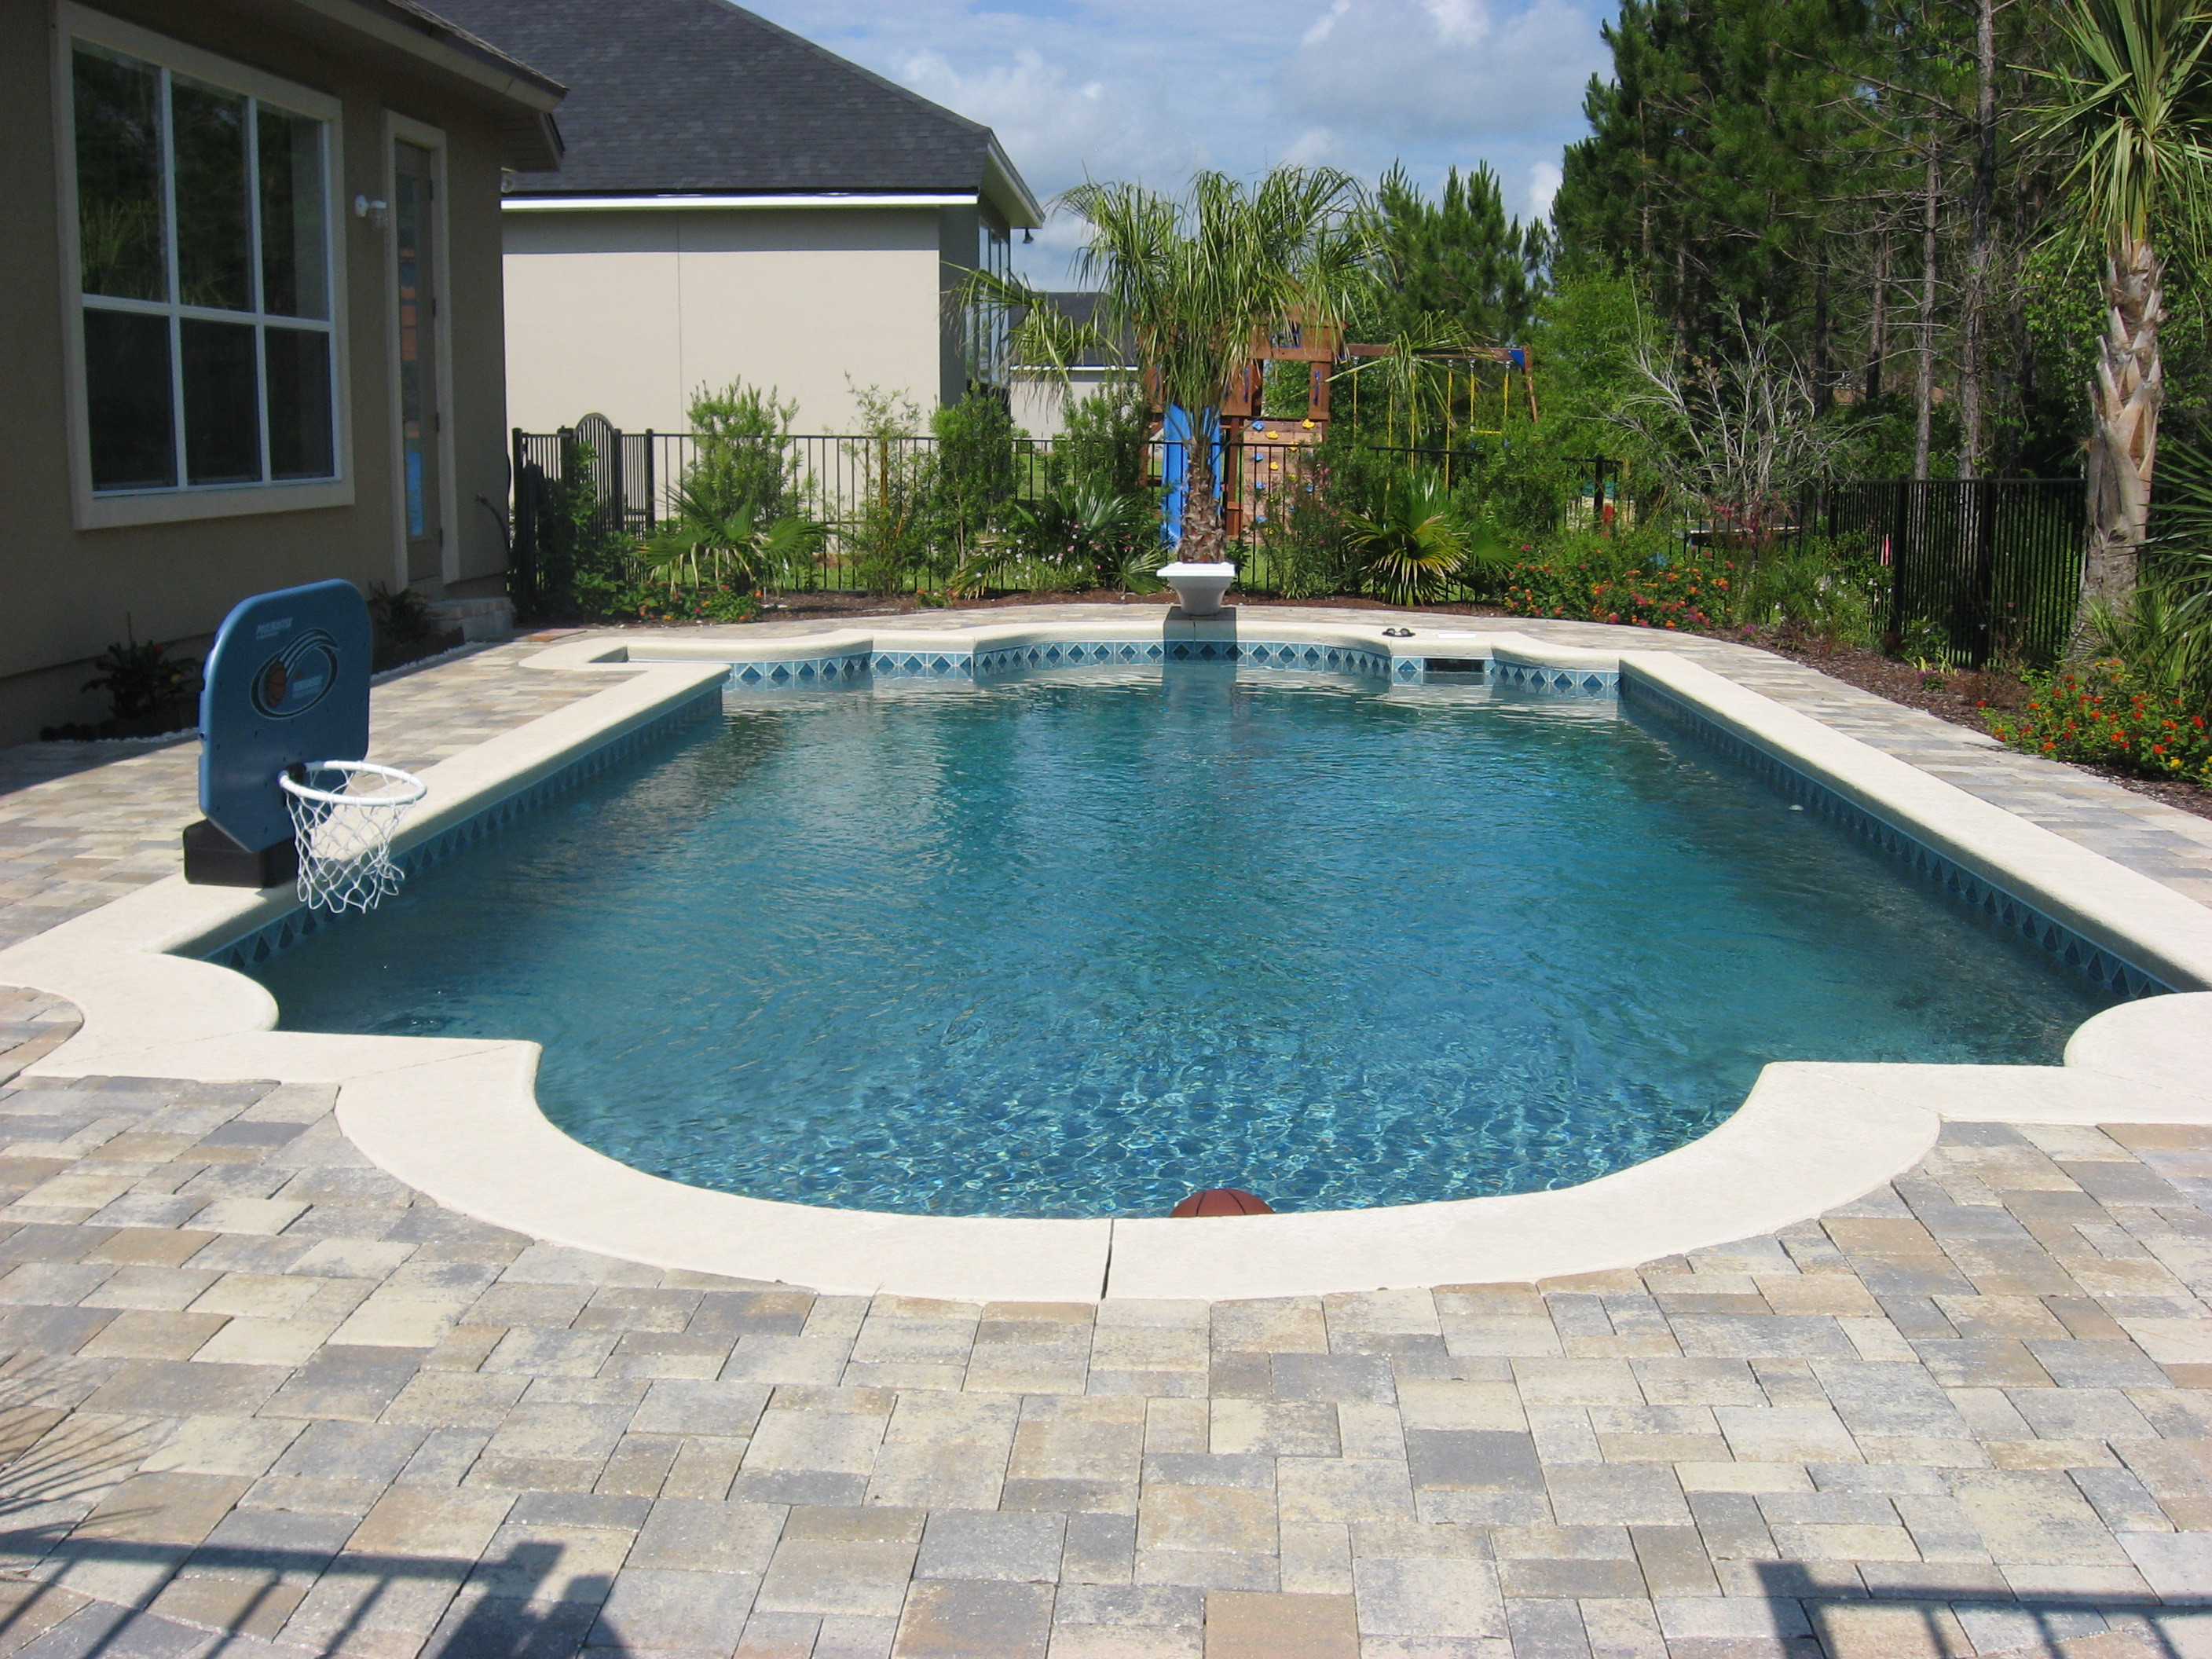 Best ideas about Fiber Glass Inground Pool
. Save or Pin Fiberglass Pools Jacksonville FL – Jacksonville Pool Builder Now.